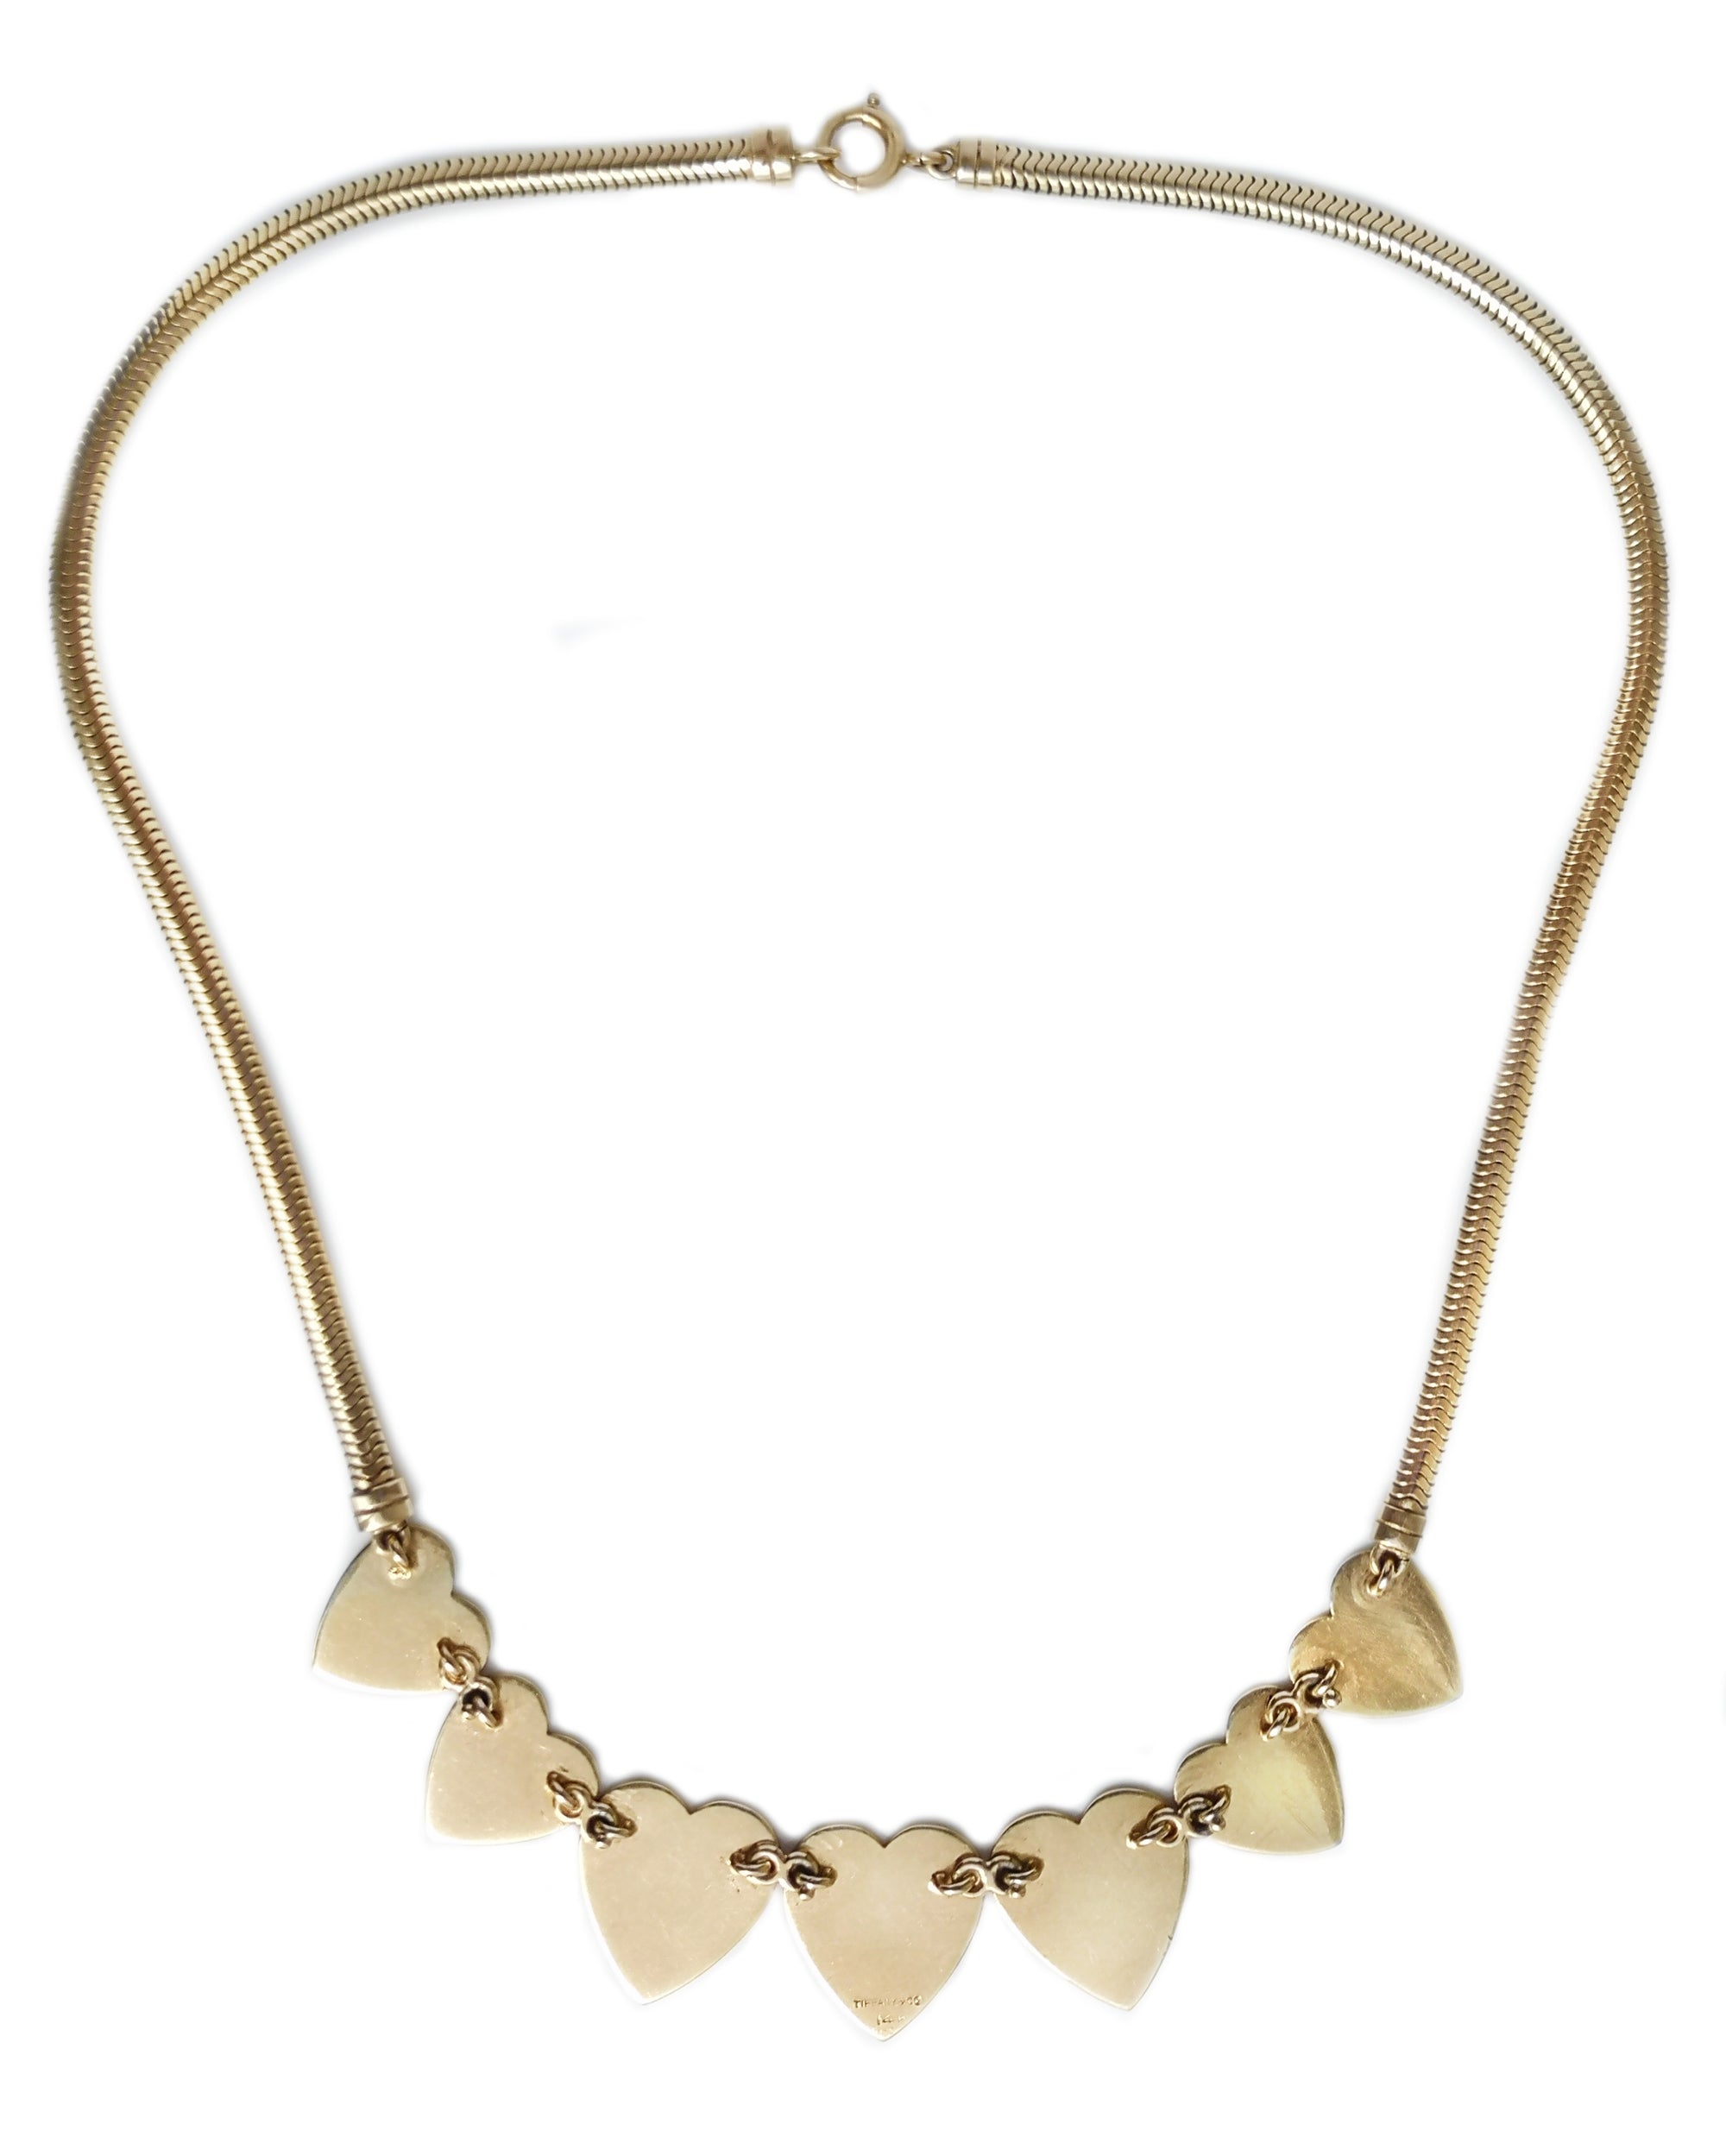 Vintage 1960s Tiffany & Co Starburst Heart Necklace 14k 15"